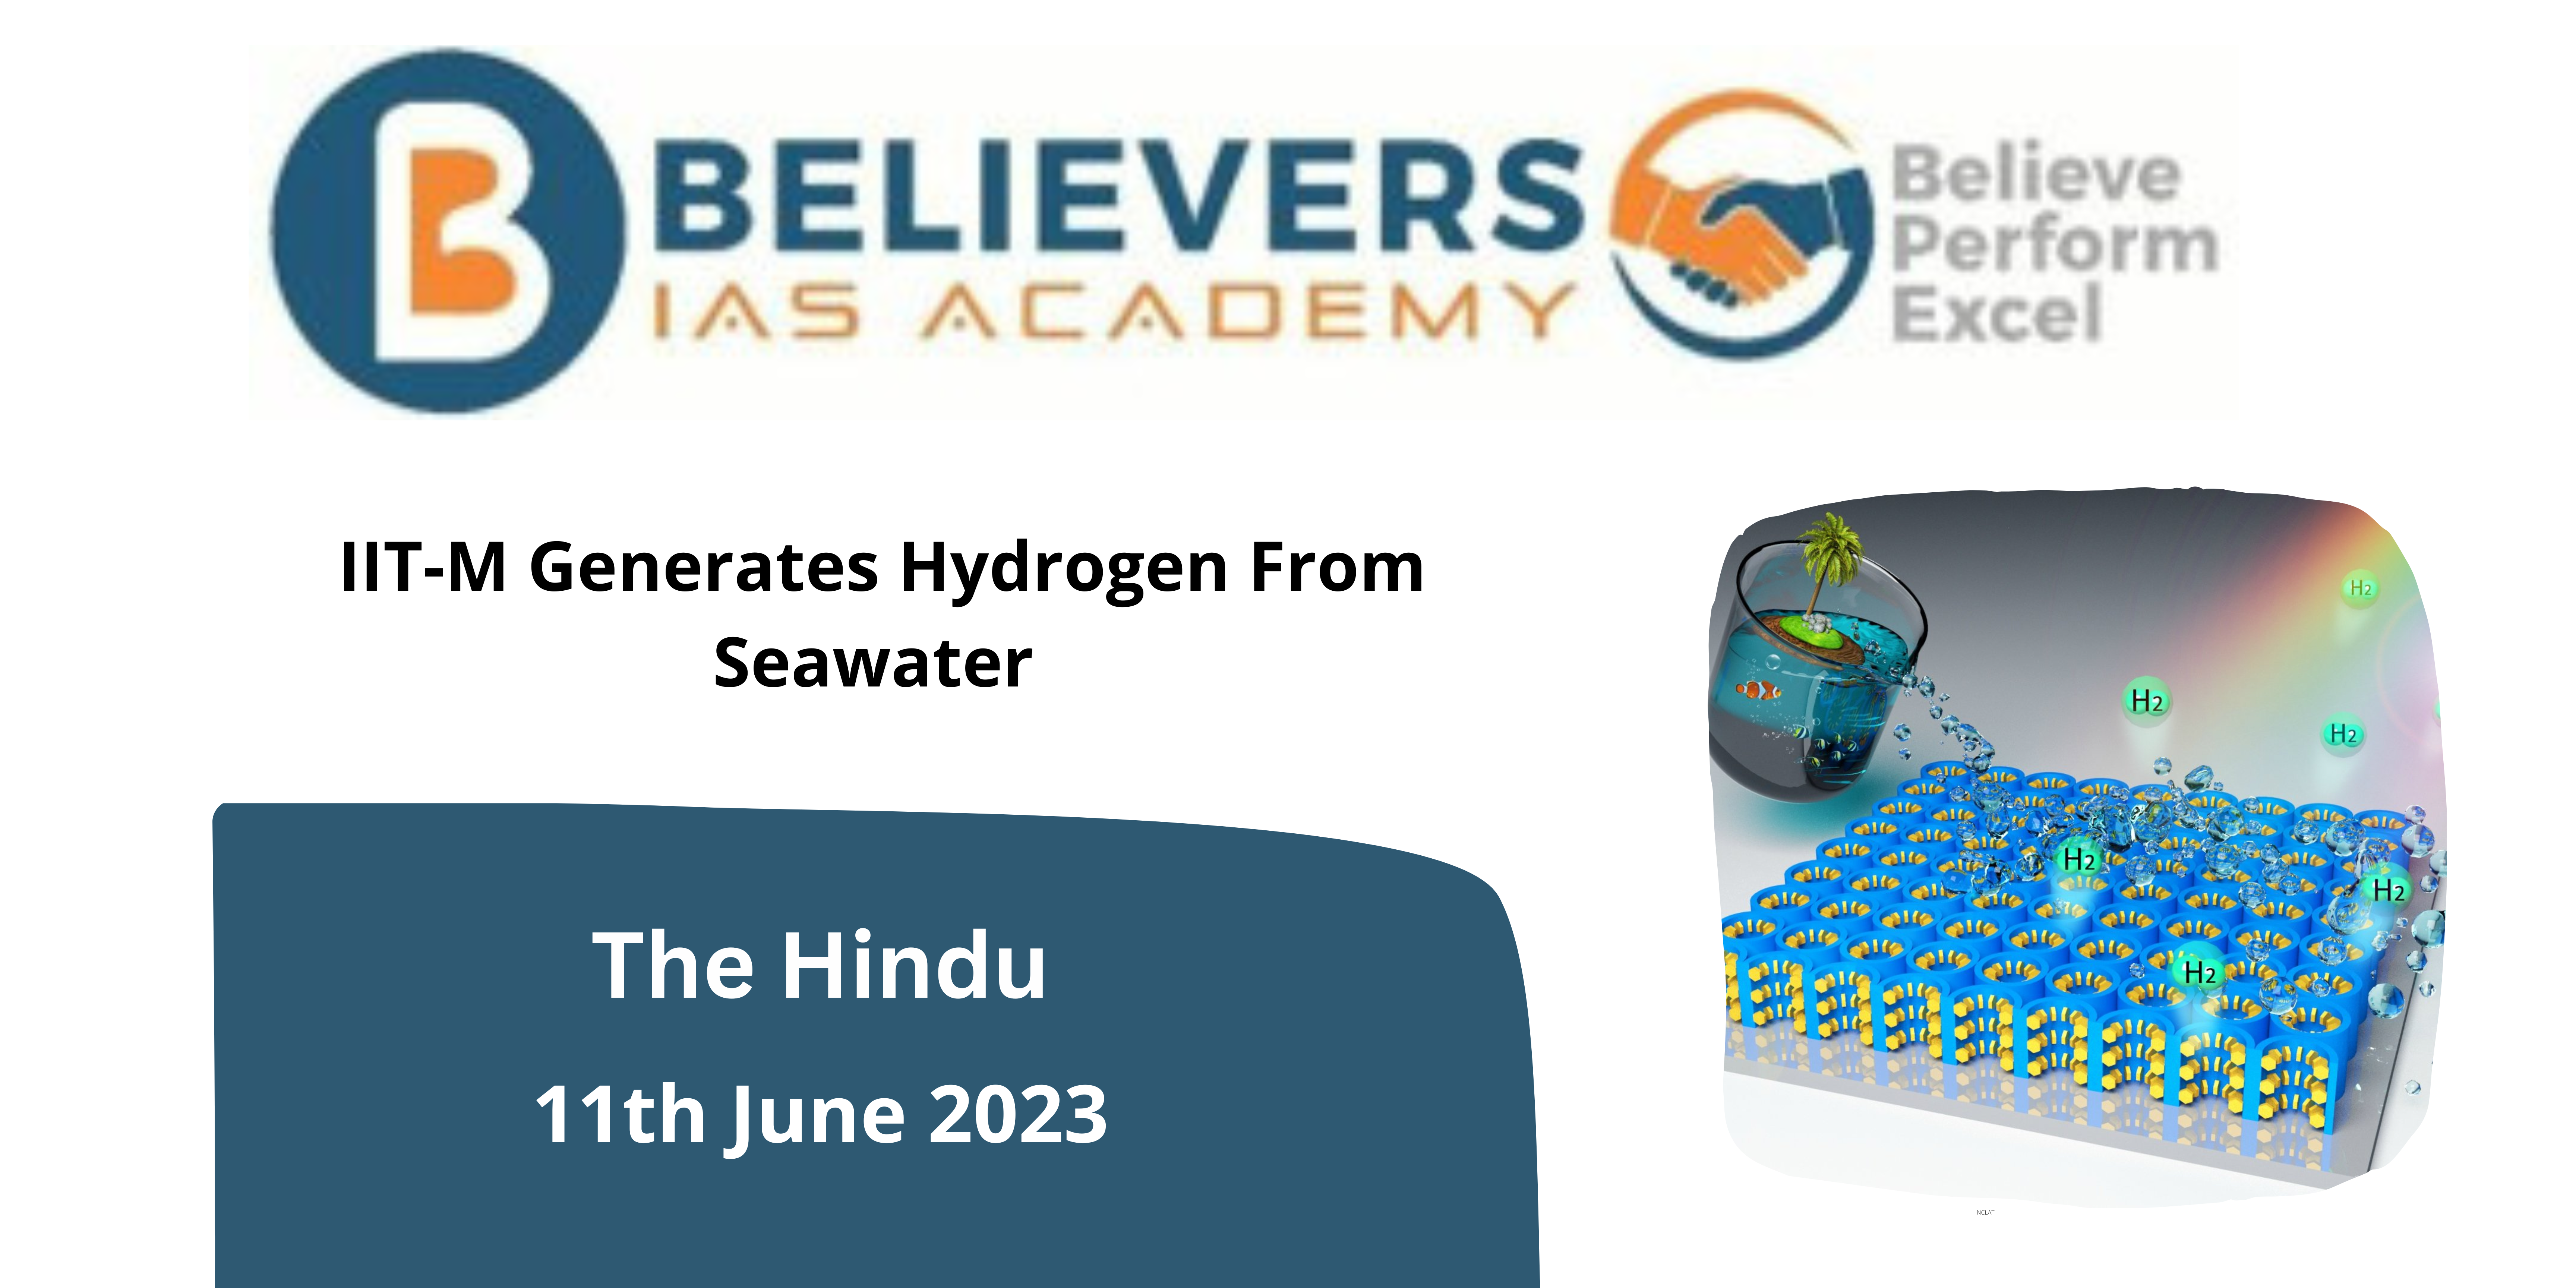 IIT-M Generates Hydrogen From Seawater